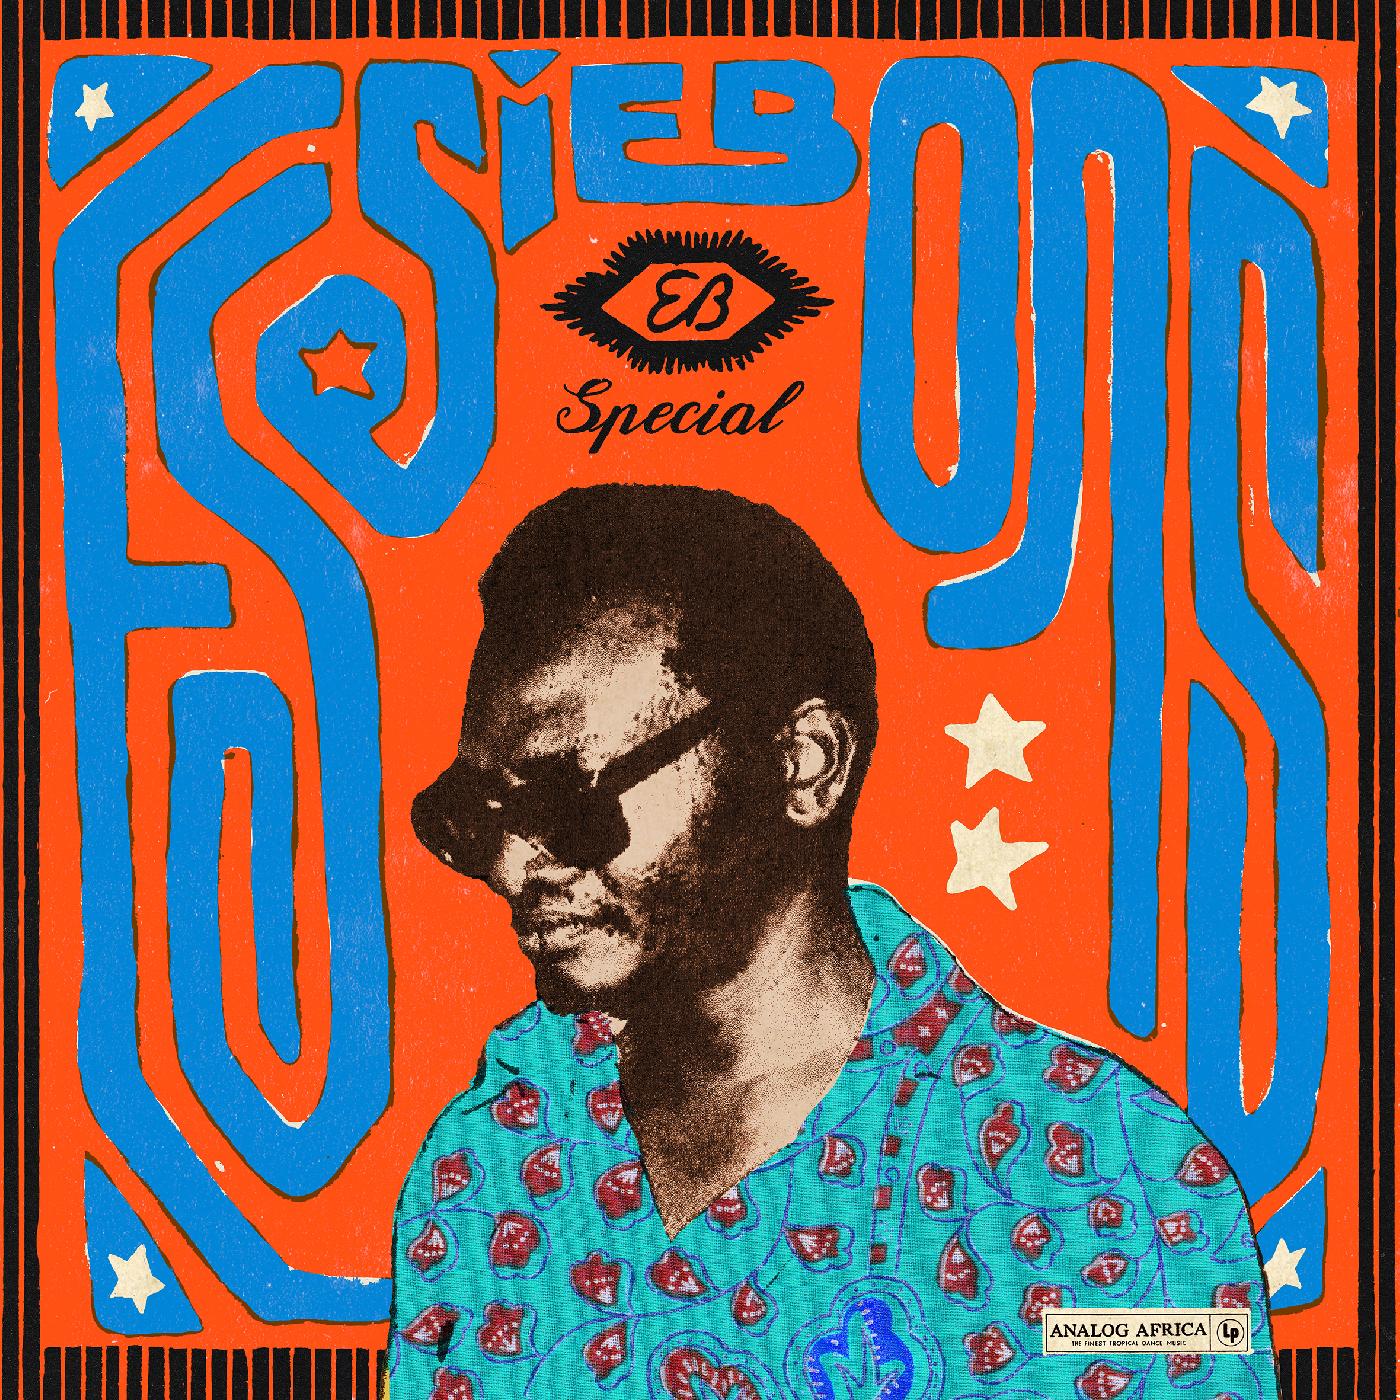 Various Artists - Essiebons Special 1973 - 1984 / Ghana Music Power House (Vinyl)